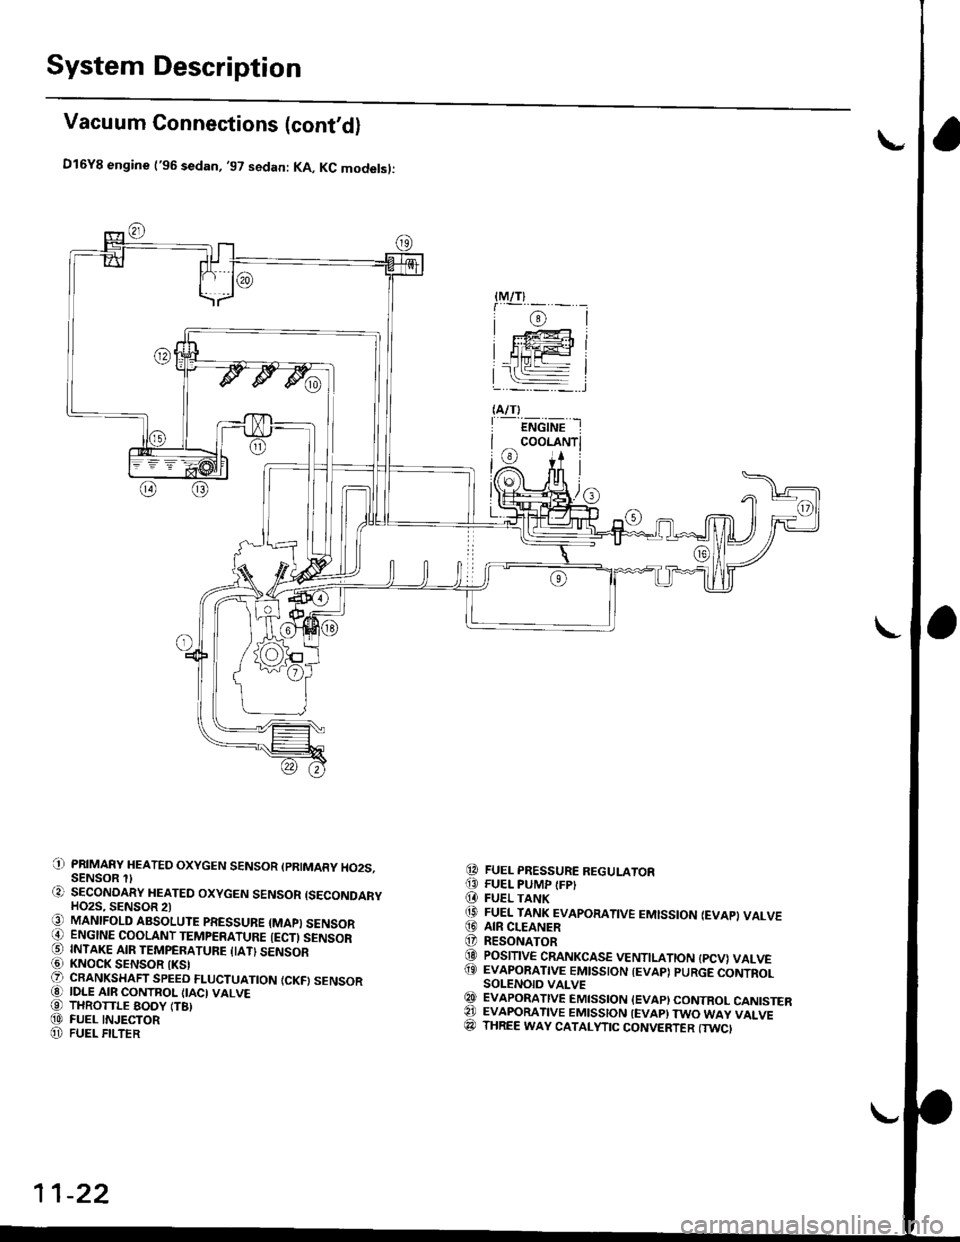 HONDA CIVIC 1997 6.G Workshop Manual System Description
Vacuum Connections (contd)
D16Y8 engine (96 sedan, 97 sedan: KA, KC modelsl:
PRIMARY HEATED OXYGEN SENSOR (PRIMARY HO2S.SENSOR  SECONOARY HEATED OXYGEN SENSOR {SECONDARYHO2S, SEN